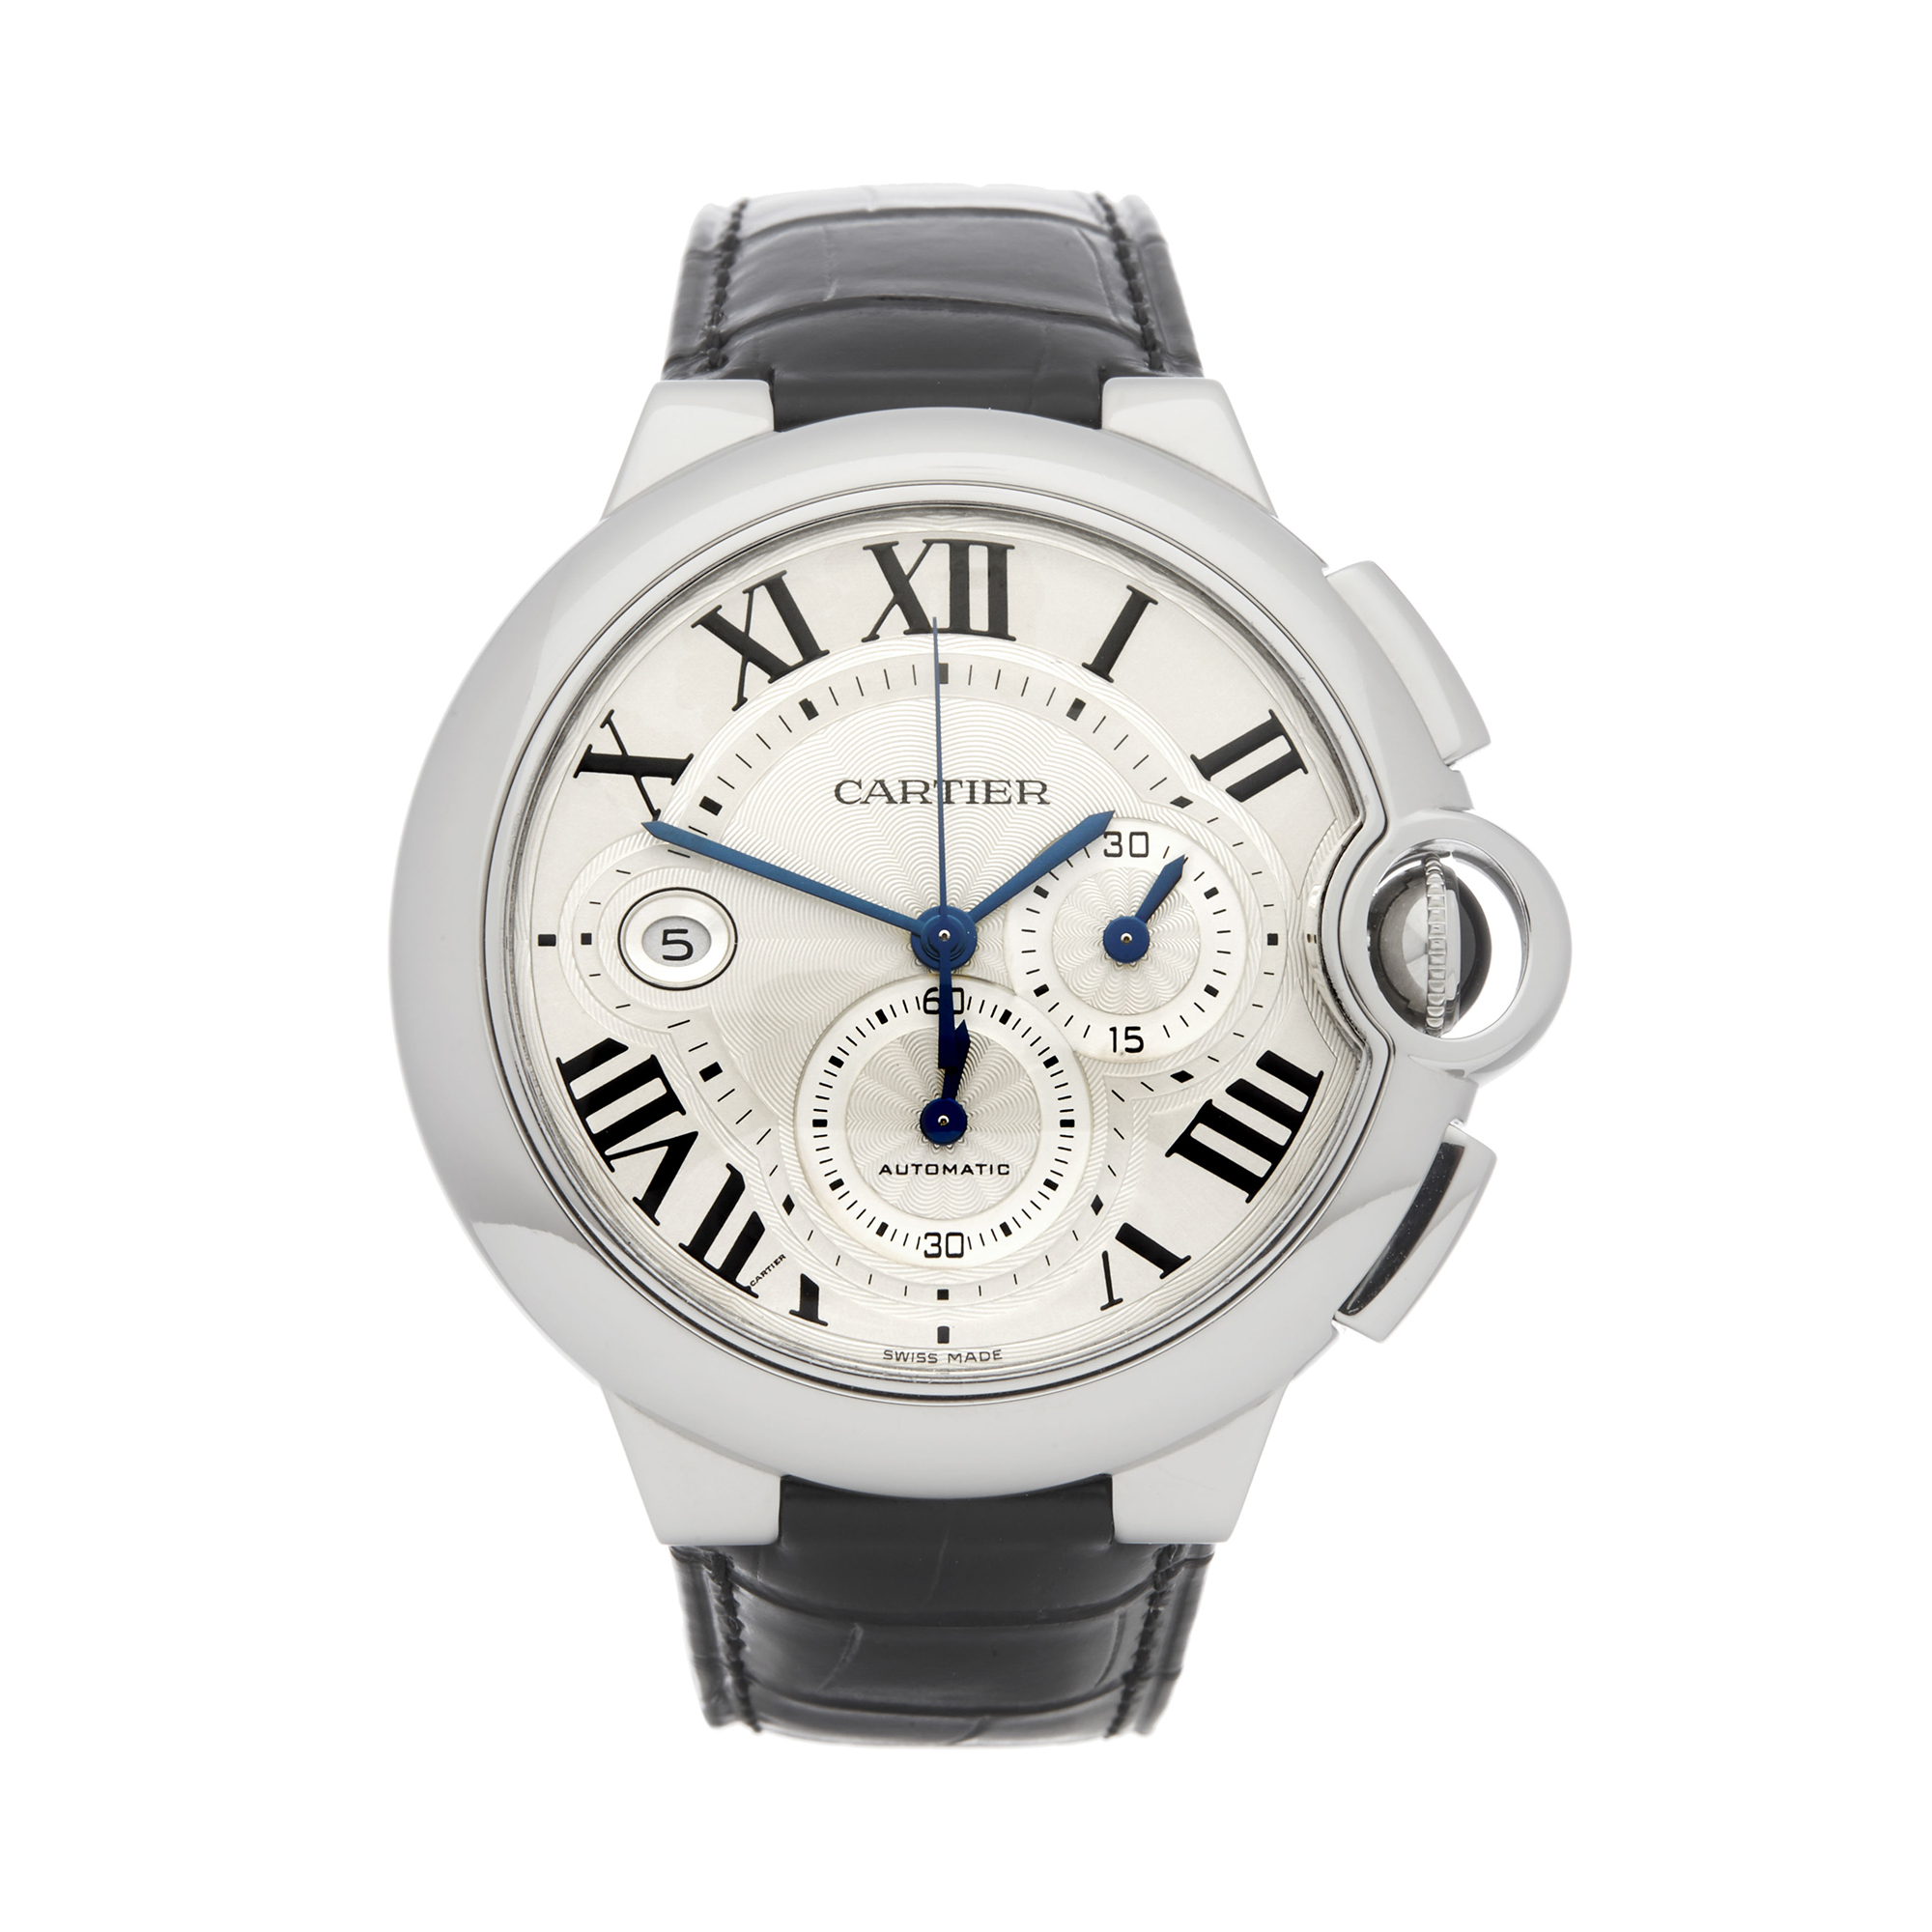 Cartier Ballon Bleu XL W6920003 or 3109 Men Stainless Steel Chronograph Watch - Image 8 of 8